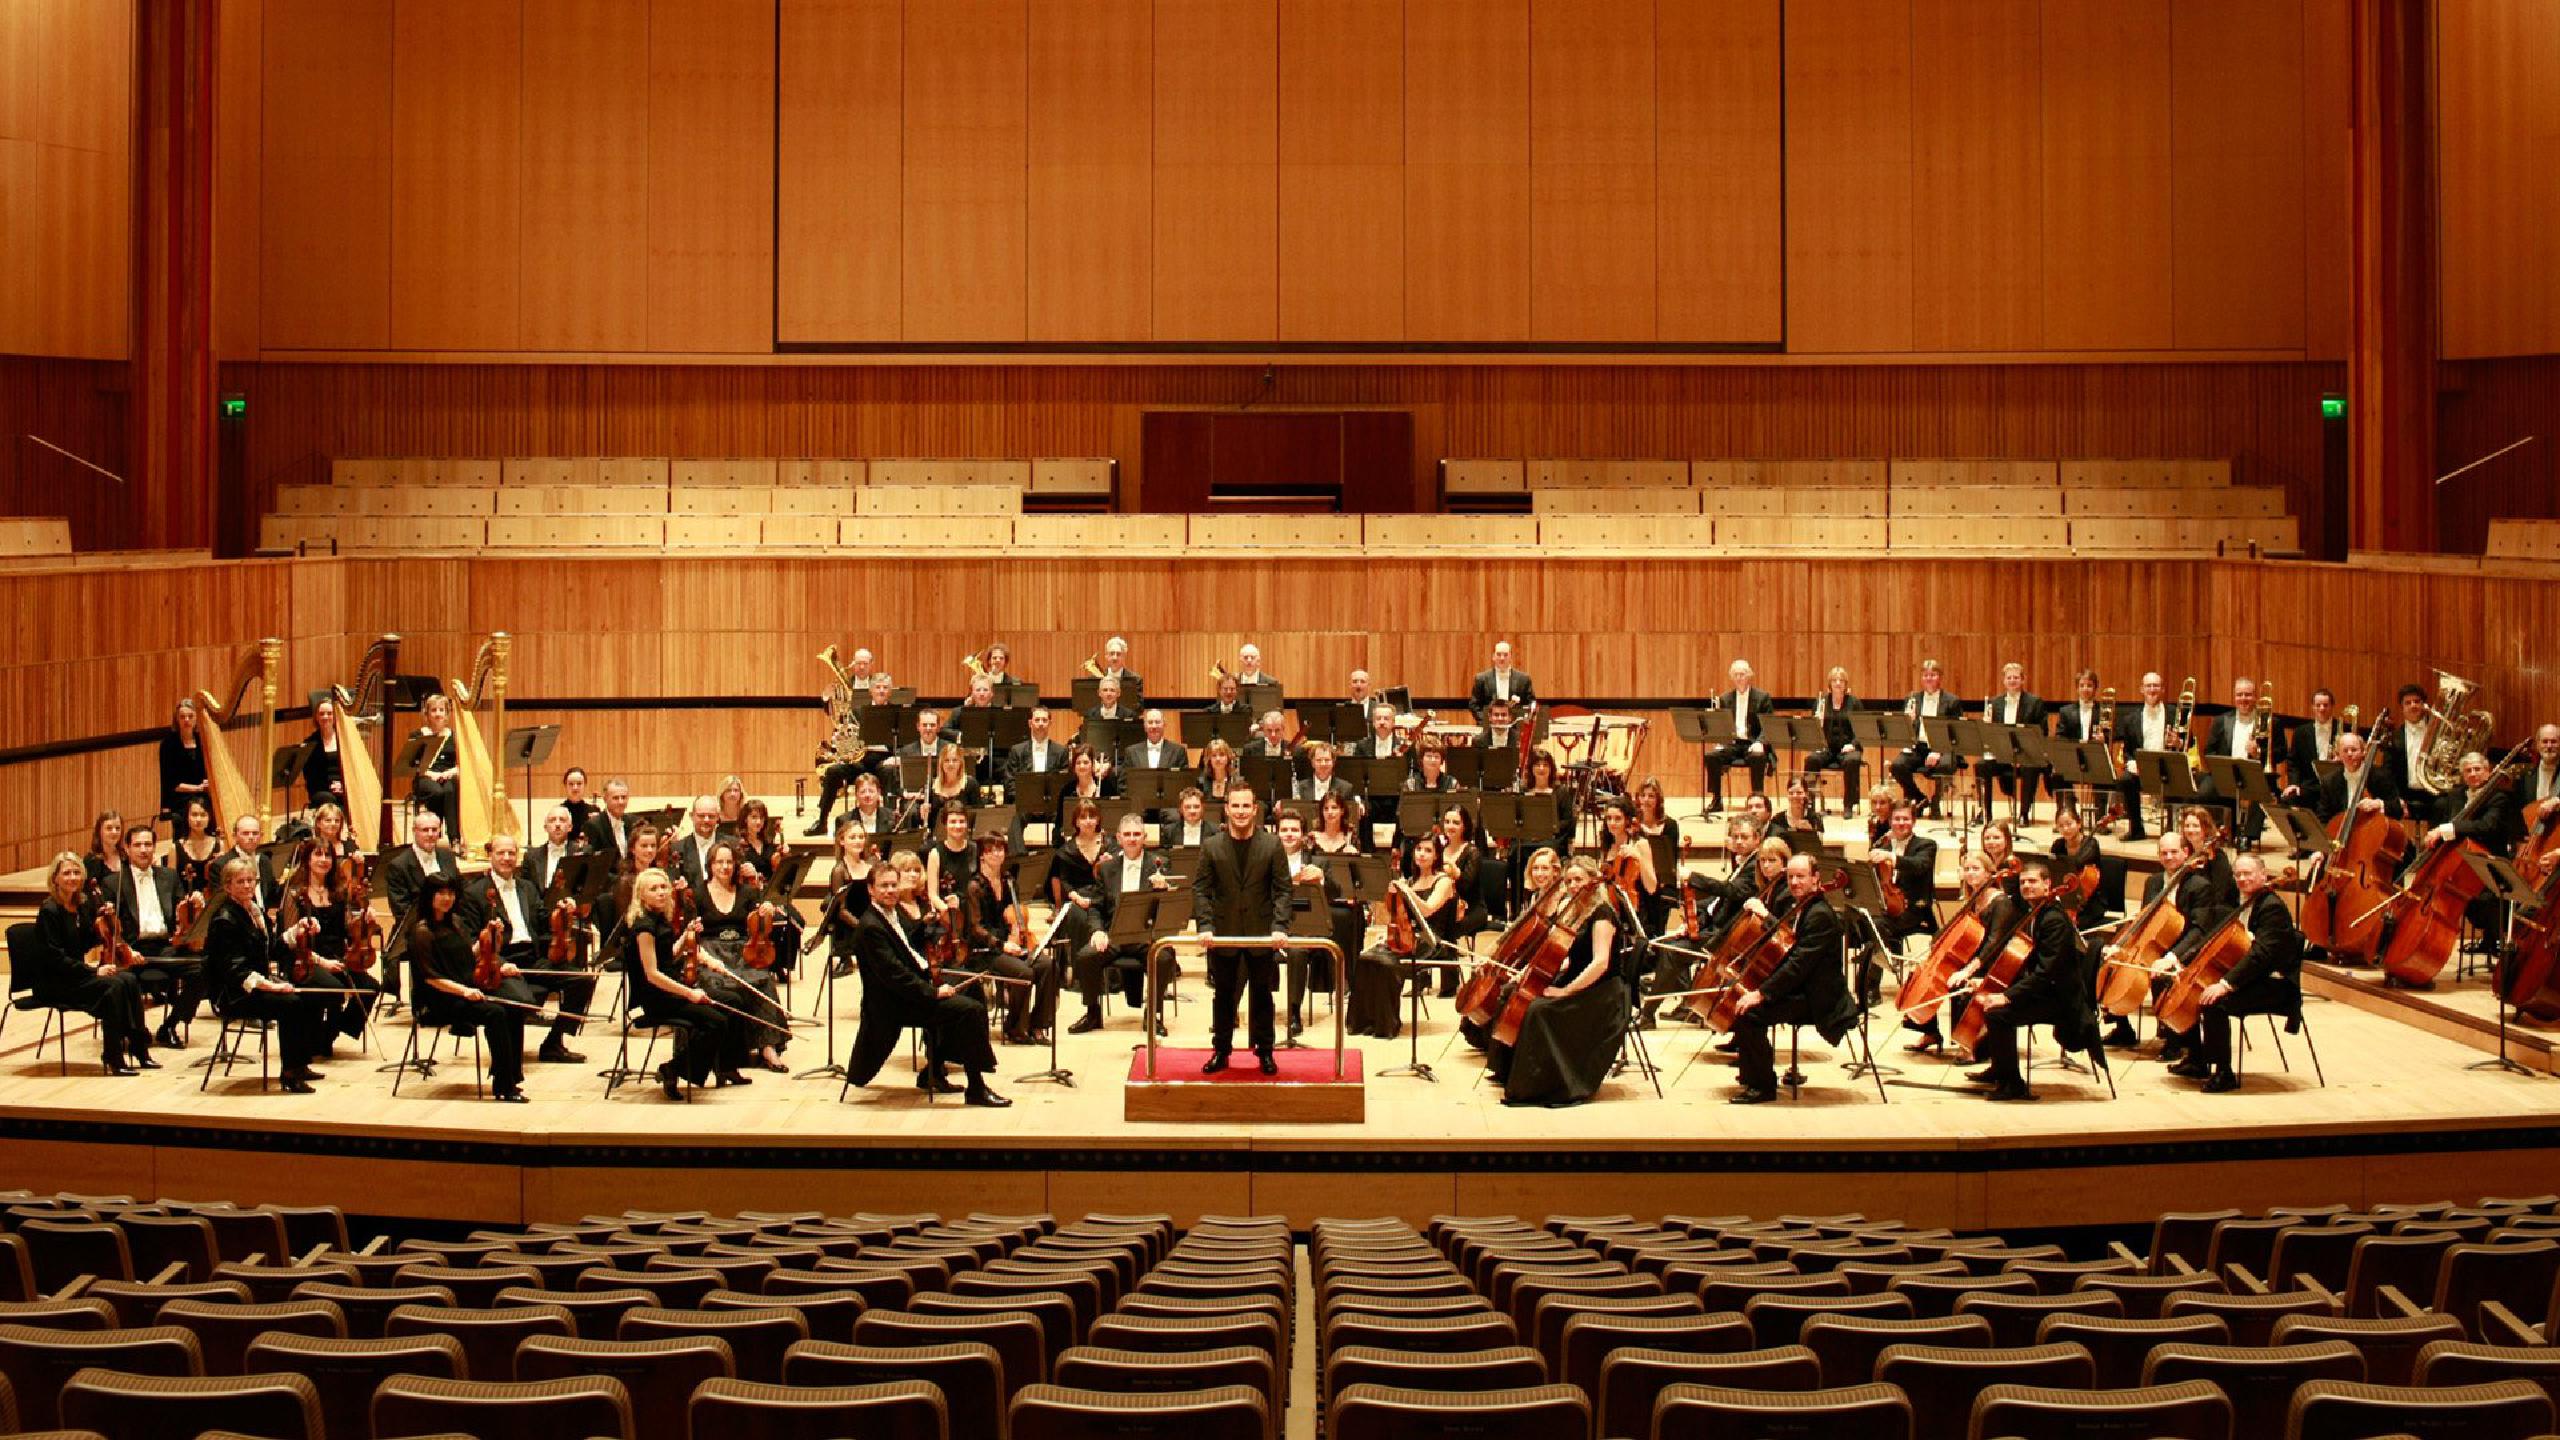 London Philharmonic Orchestra fechas de gira 2022 2023. London